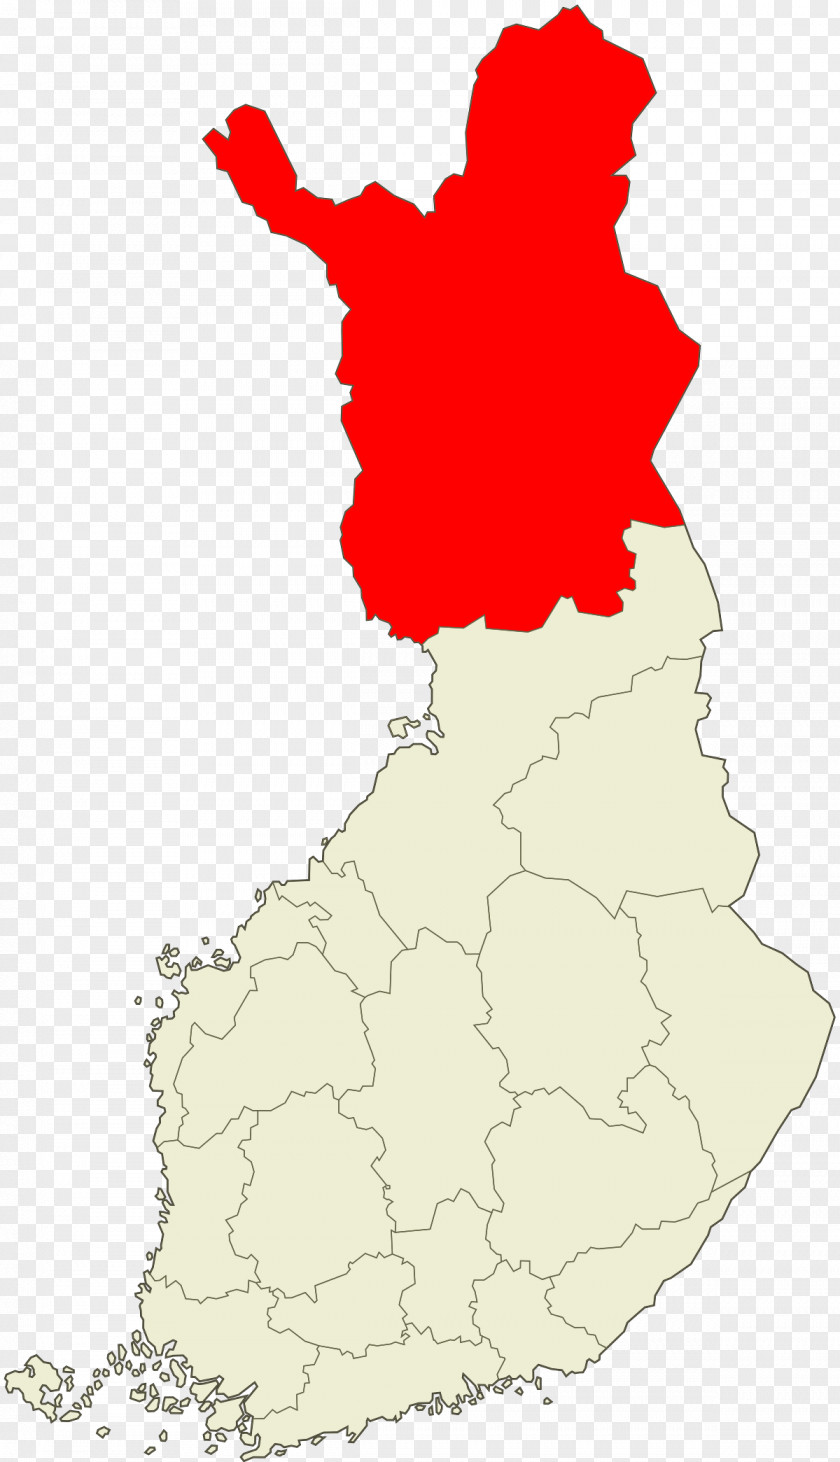 RUSSIA 2018 Lapland Ostrobothnia Southern Finland Province Southwest Finnish European Union Membership Referendum, 1994 PNG